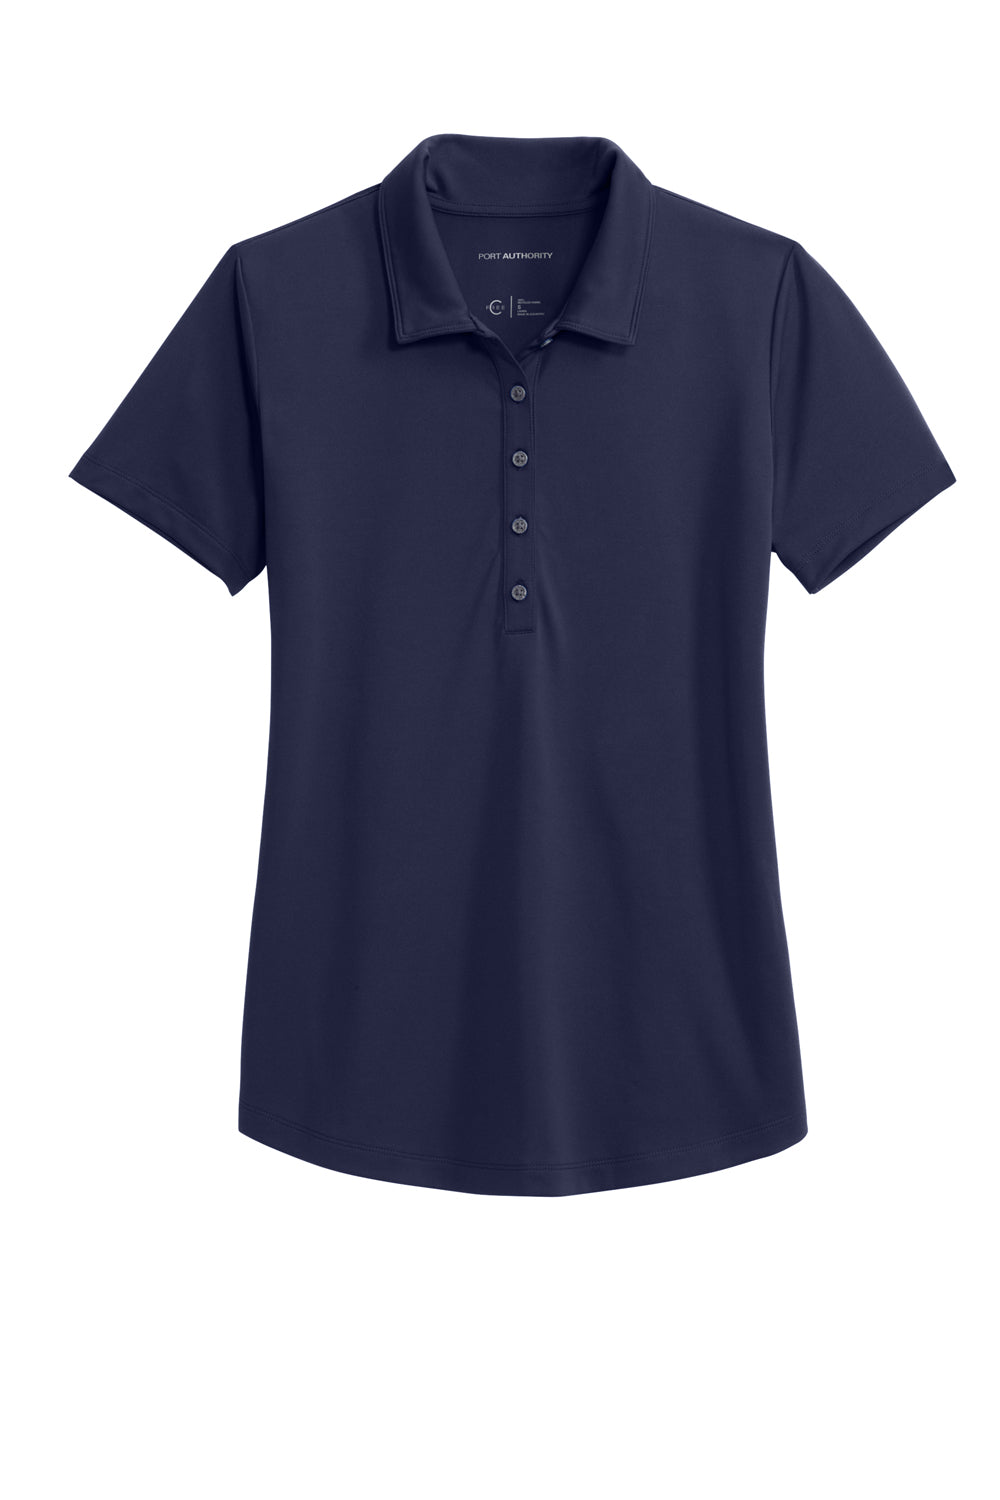 Port Authority LK864 C-Free Performance Short Sleeve Polo Shirt True Navy Blue Flat Front